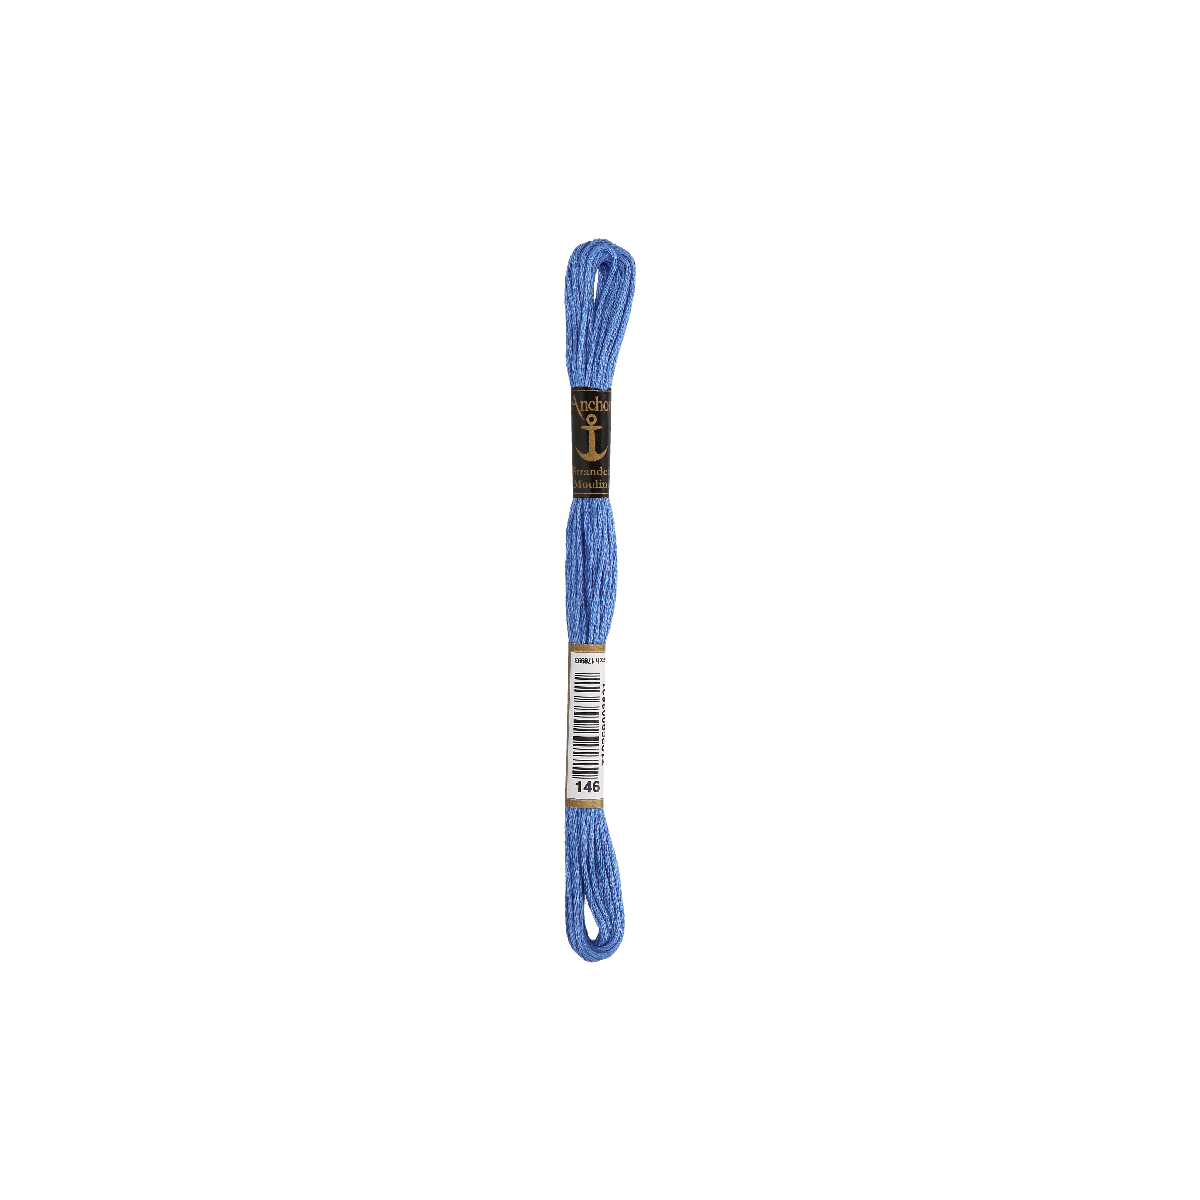 Anchor Sticktwist 8m, azul, algodón, color 146,...